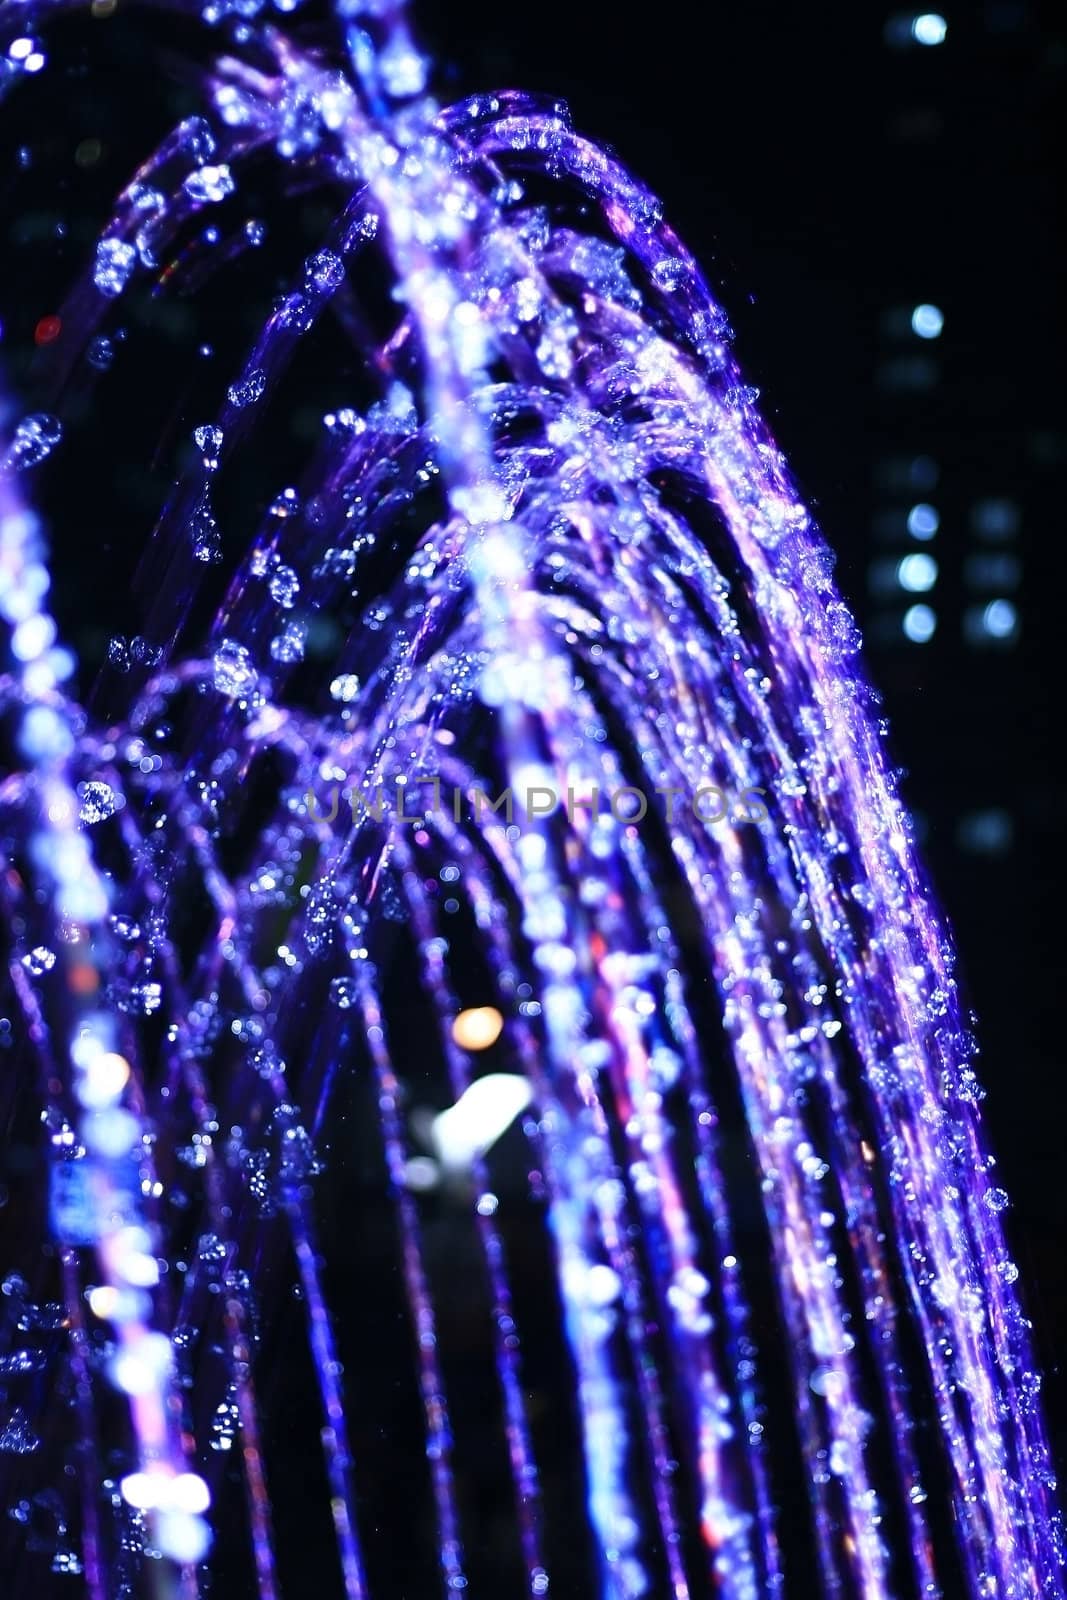 Fountain Water Fall by sacatani